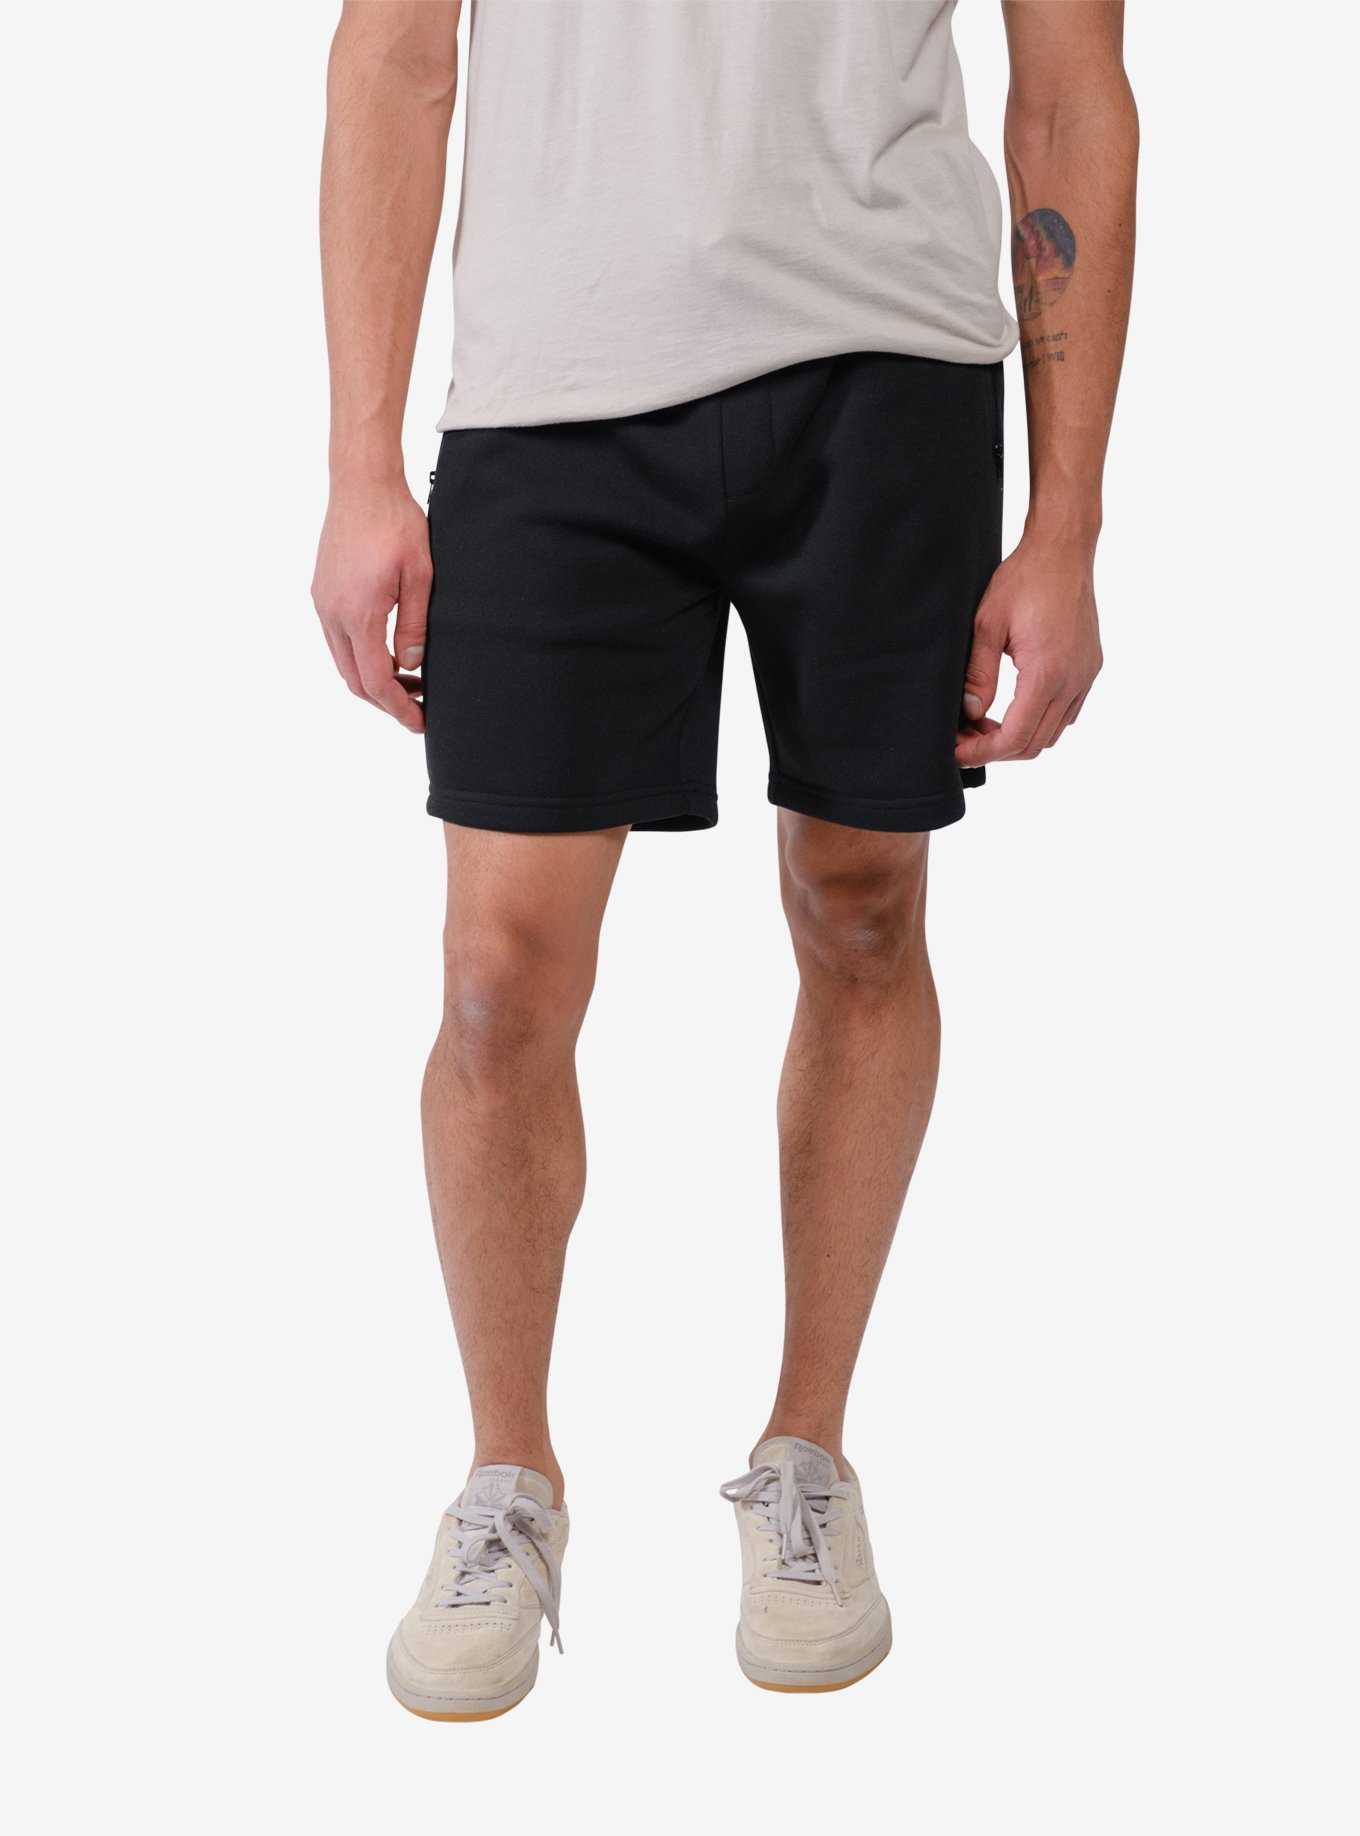 Zip Pocket 2.0 Inseam 5" Fleece Shorts Black, , hi-res